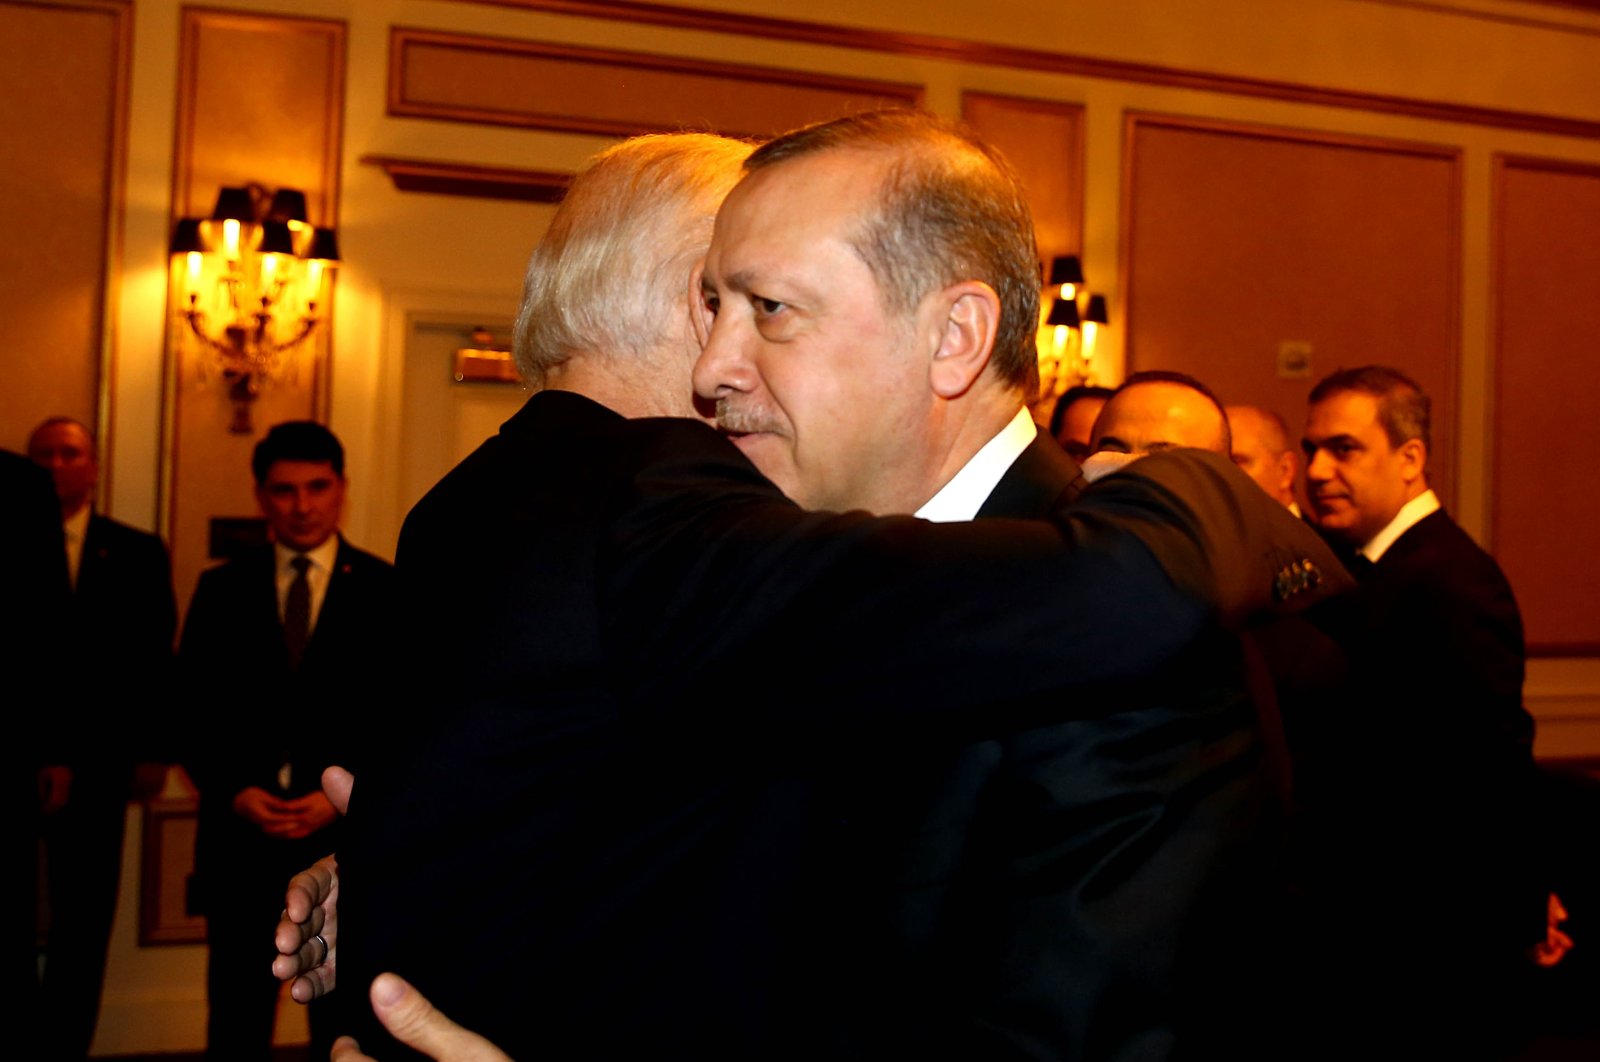 Then U.S. Vice President Joe Biden (L) hugs President Recep Tayyip Erdoğan during an official visit, Ankara, Turkey, March 31, 2016. (Photo by Turkish Presidency)